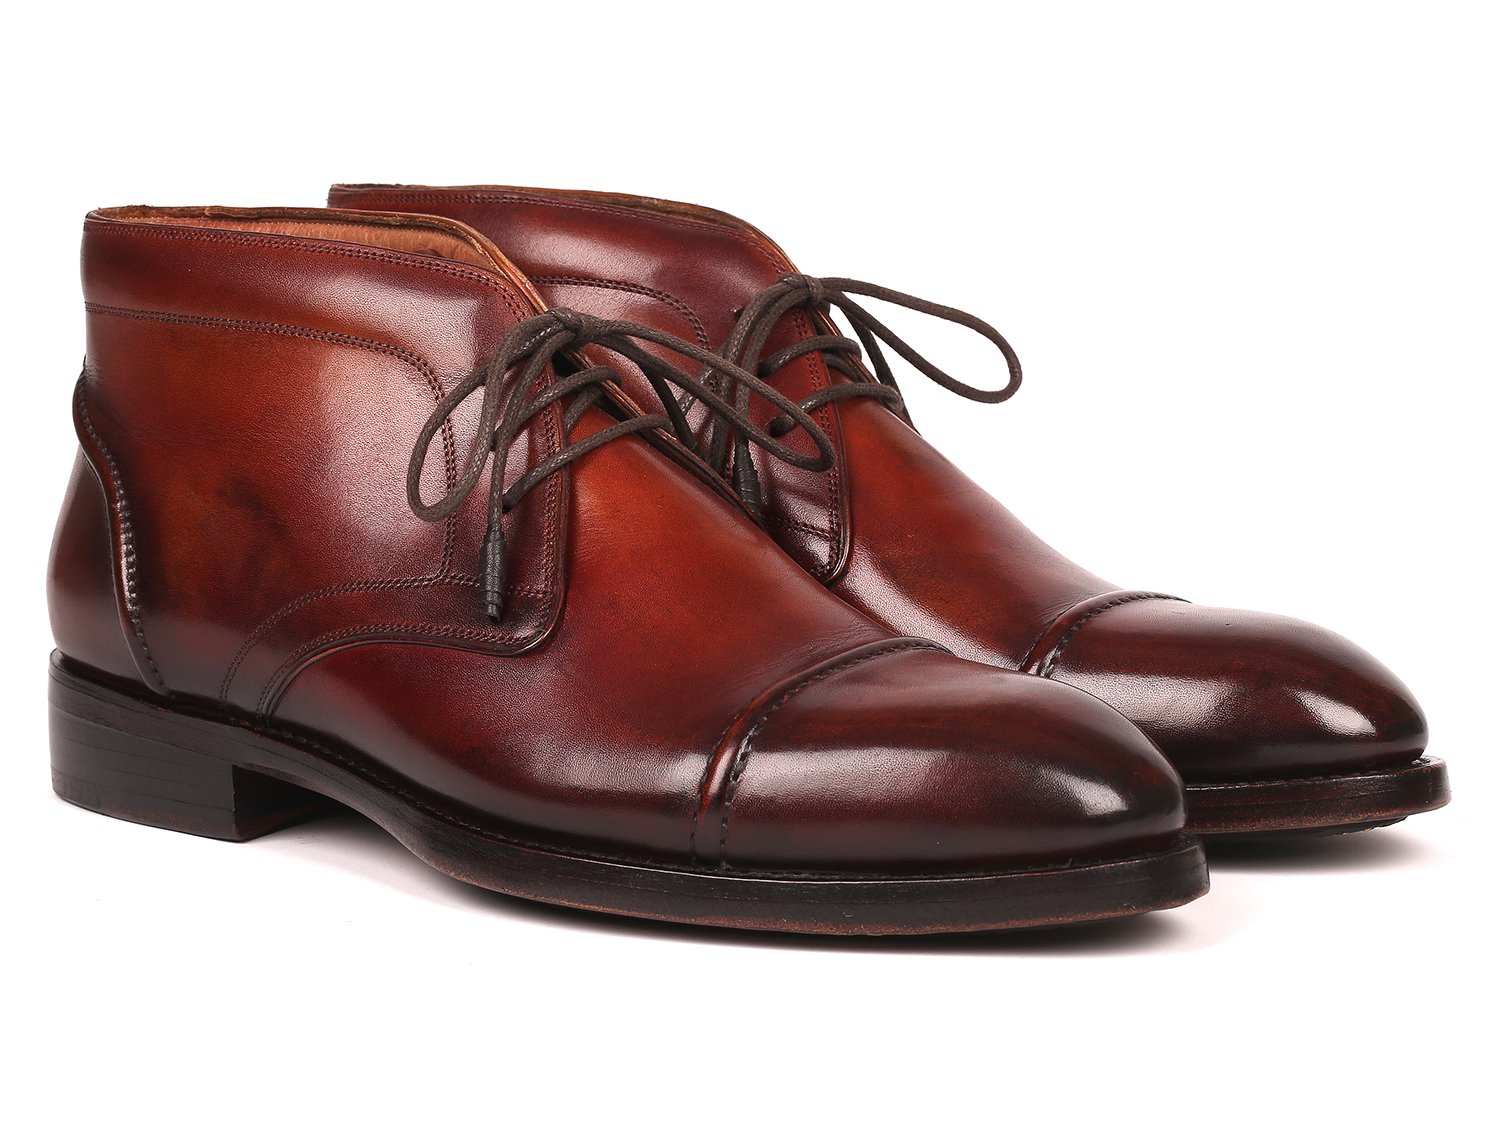 Paul Parkman "144BRW68" Brown Hand-Painted Genuine Calfskin Cap Toe Chukka Boots